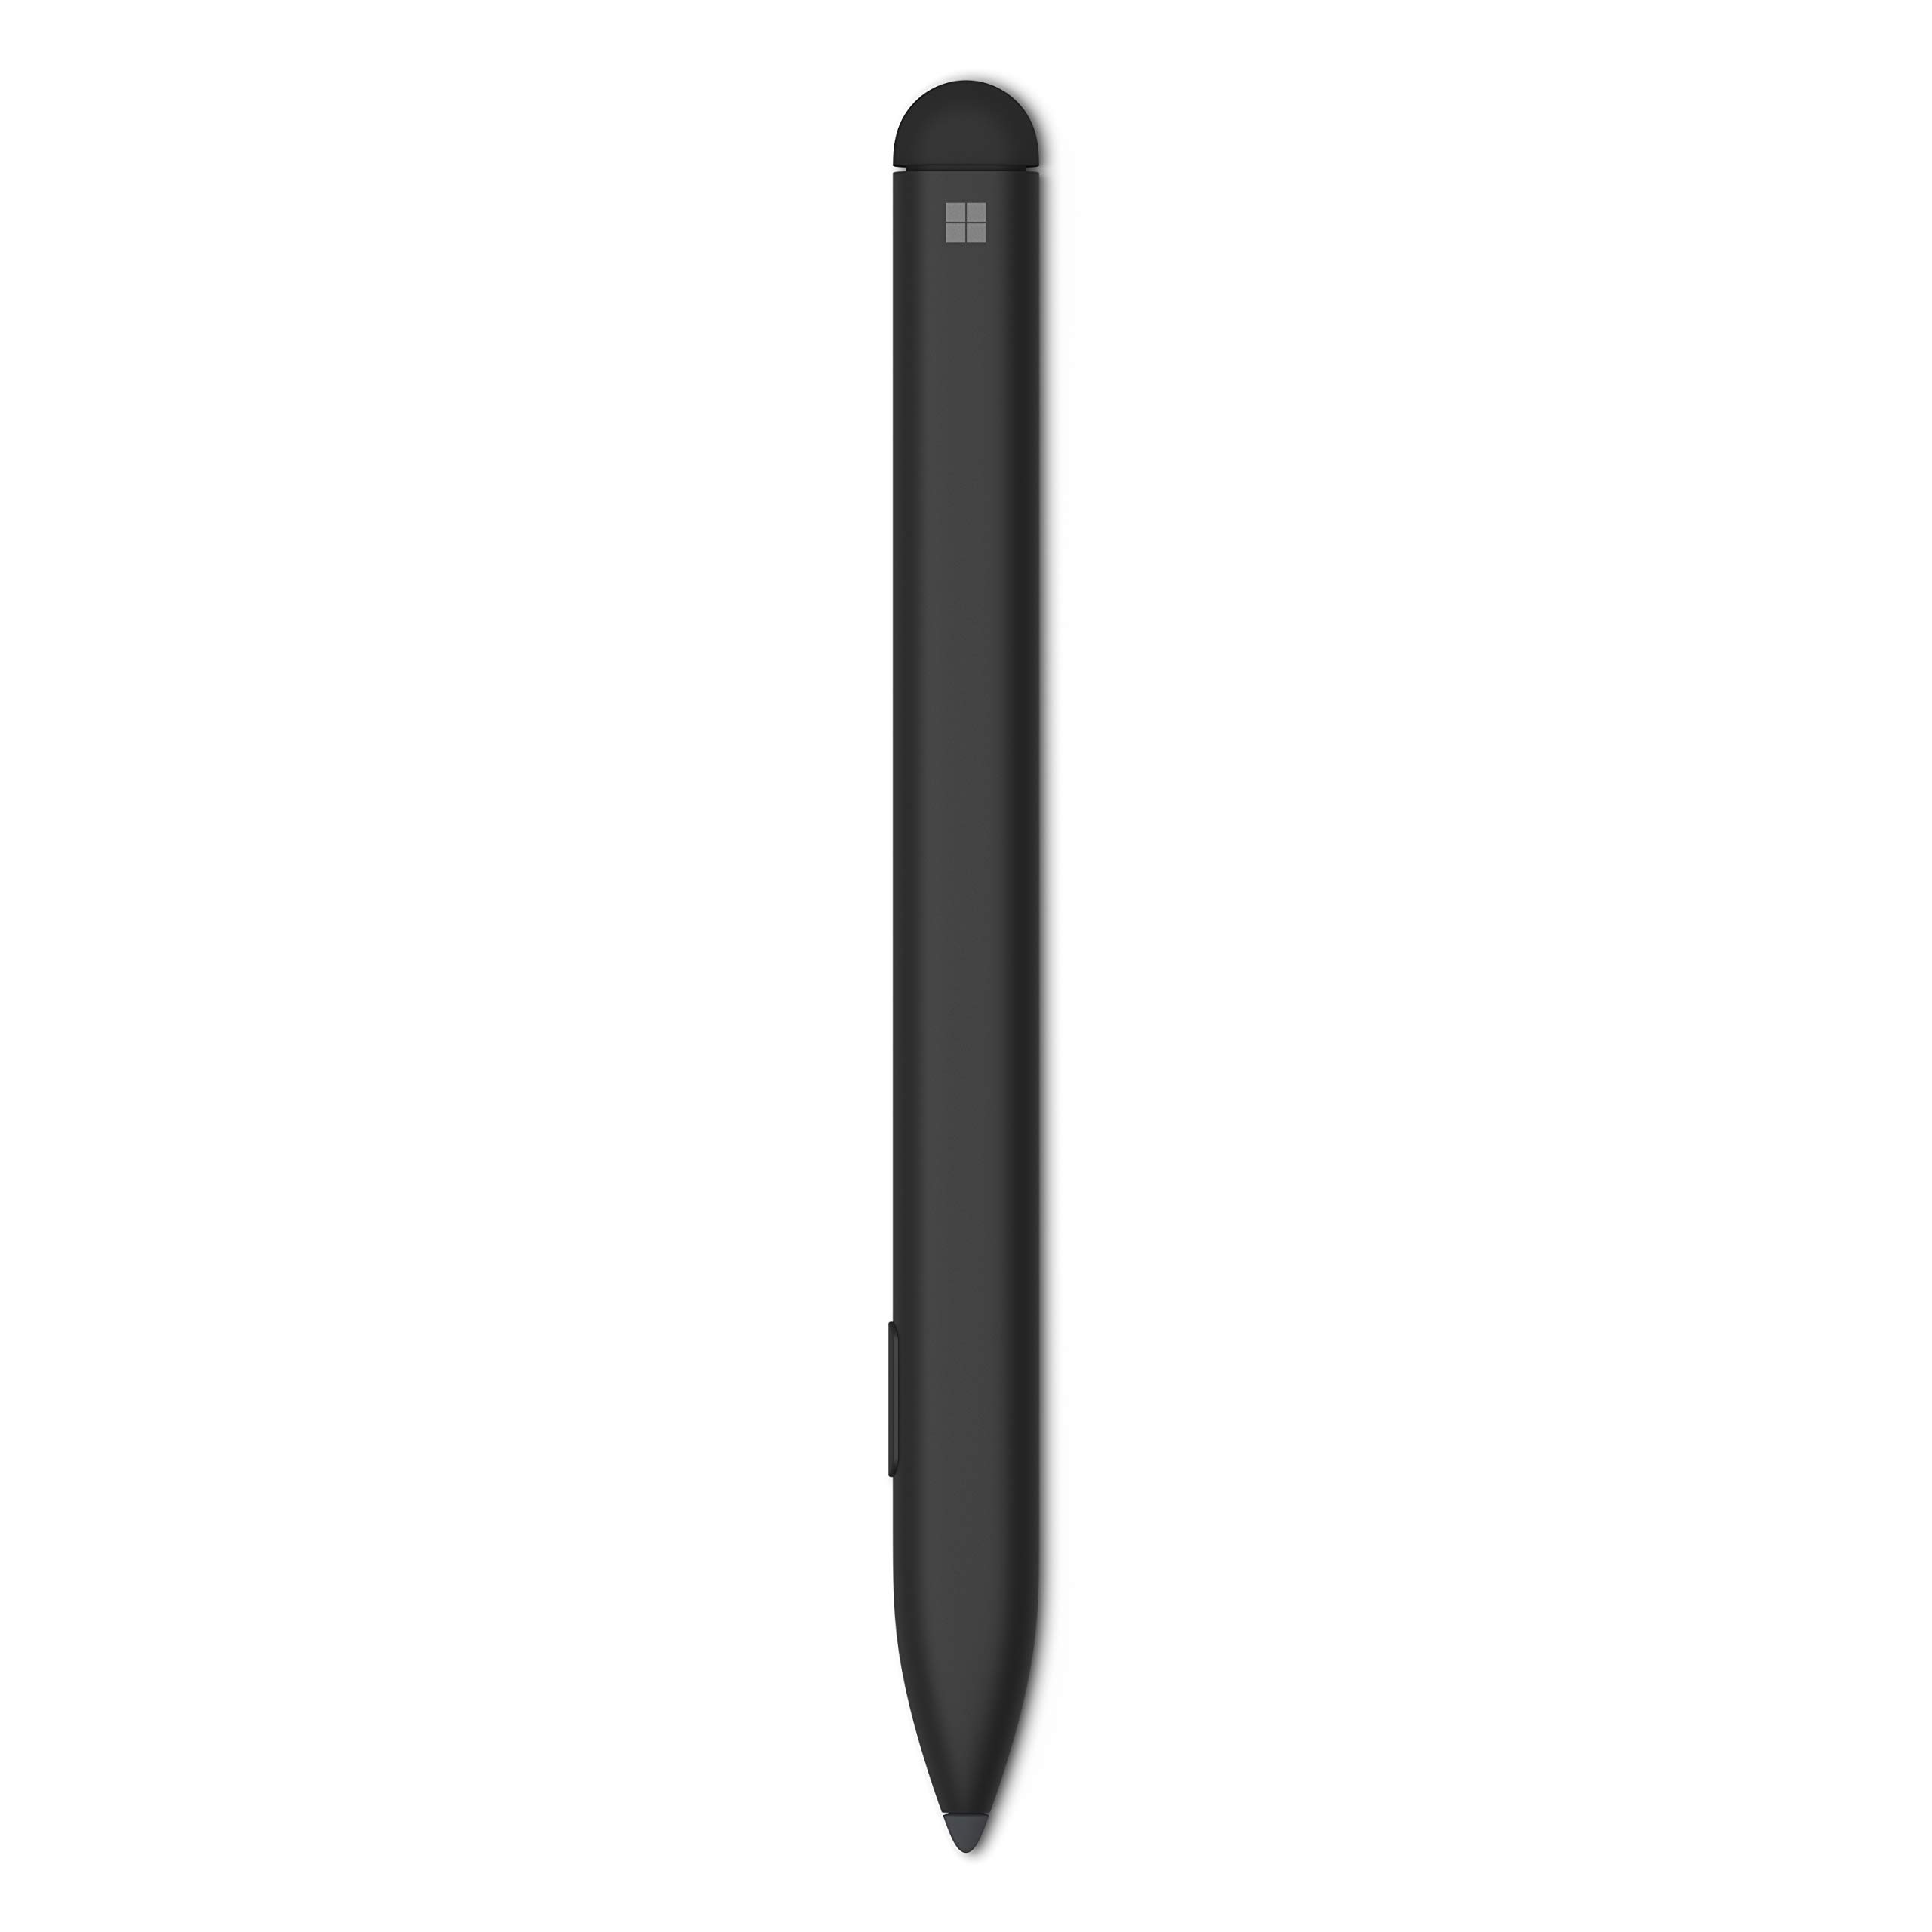 New Microsoft Surface Pro X Signature Keyboard with Slim Pen